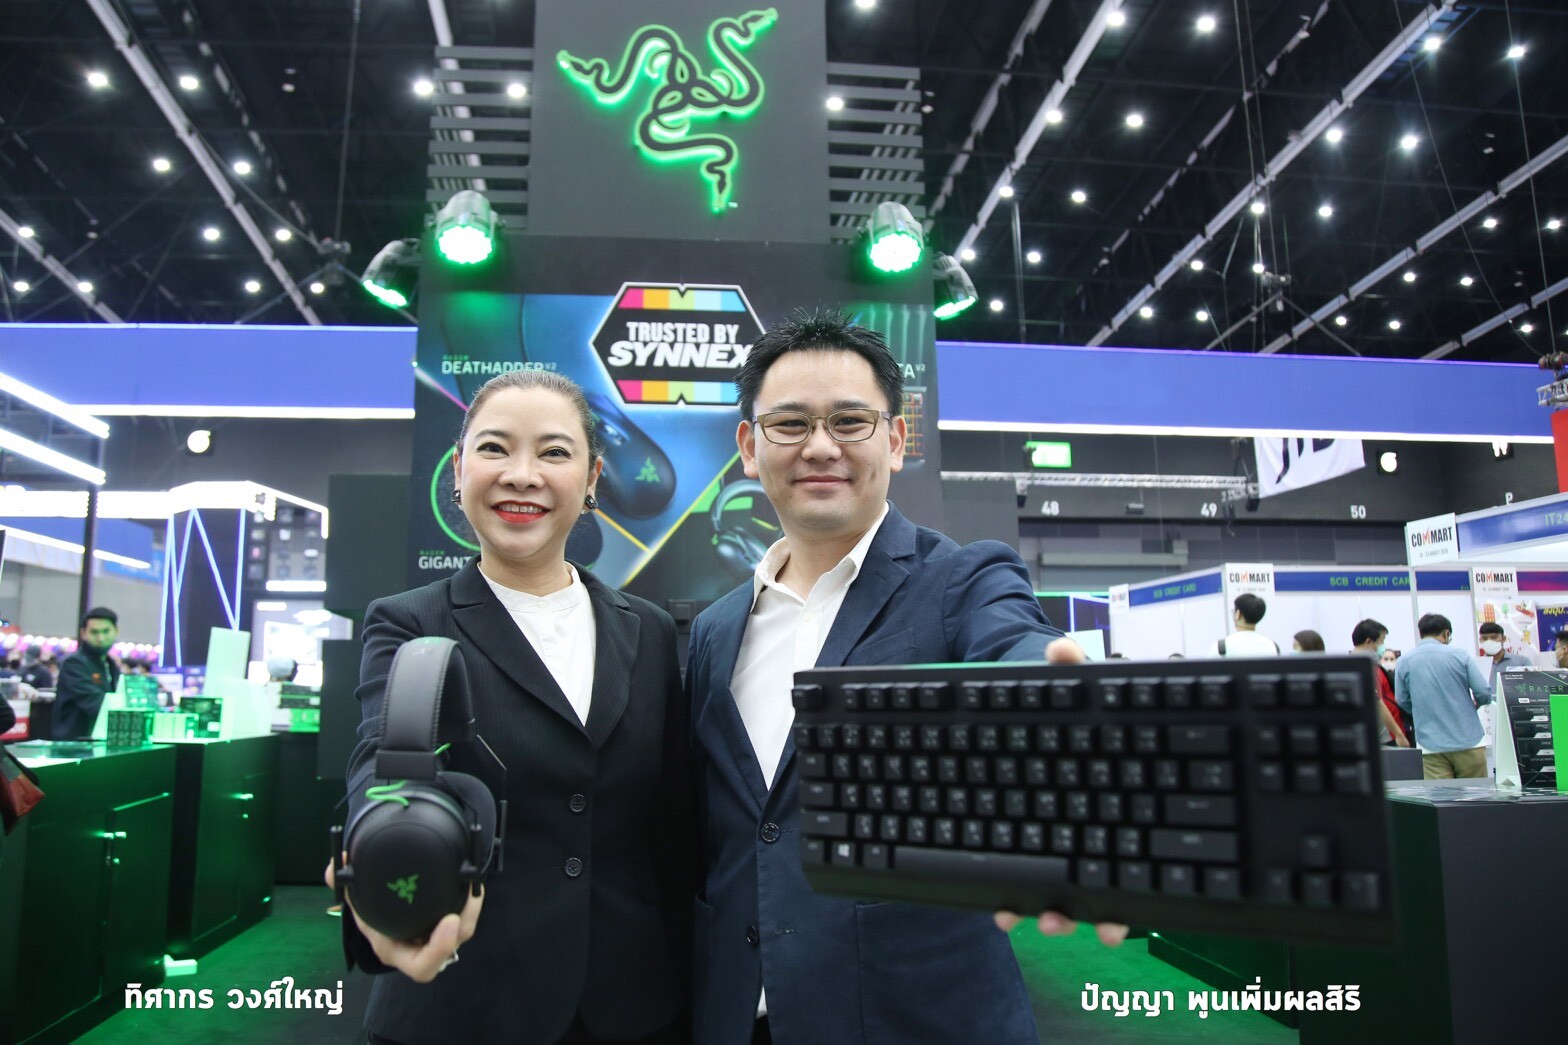 SYNNEX ยกทัพเกมมิ่งเกียร์แบรนด์ดัง “RAZER” พร้อมประกันจาก AIG  บุกงาน COMMART Thailand 2020 ปลื้มกระแสตอบรับแรง